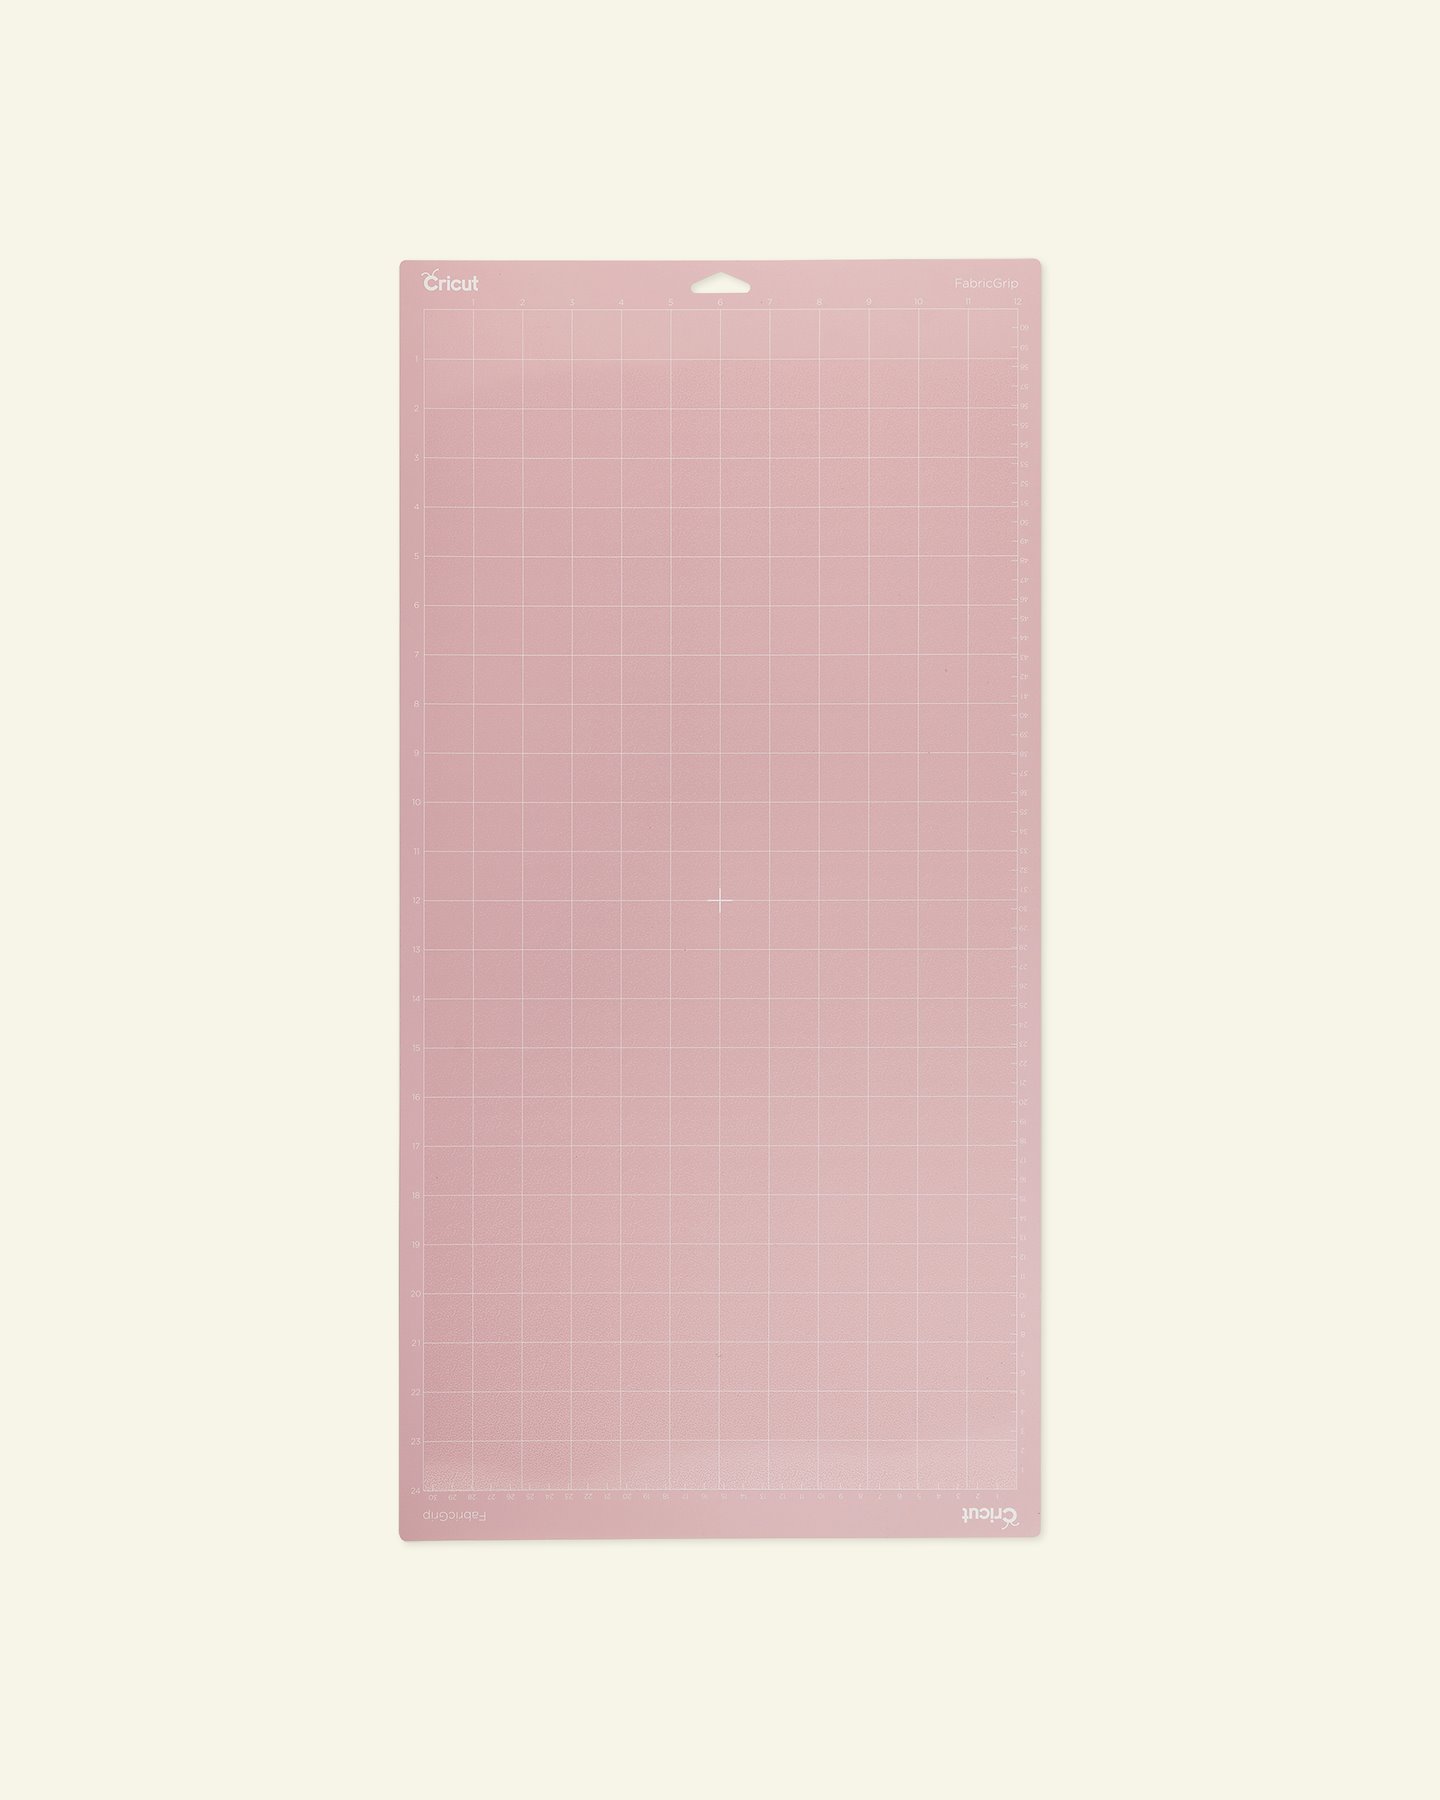 Cricut FabricGrip Mat - Pink - 12 x 24 in